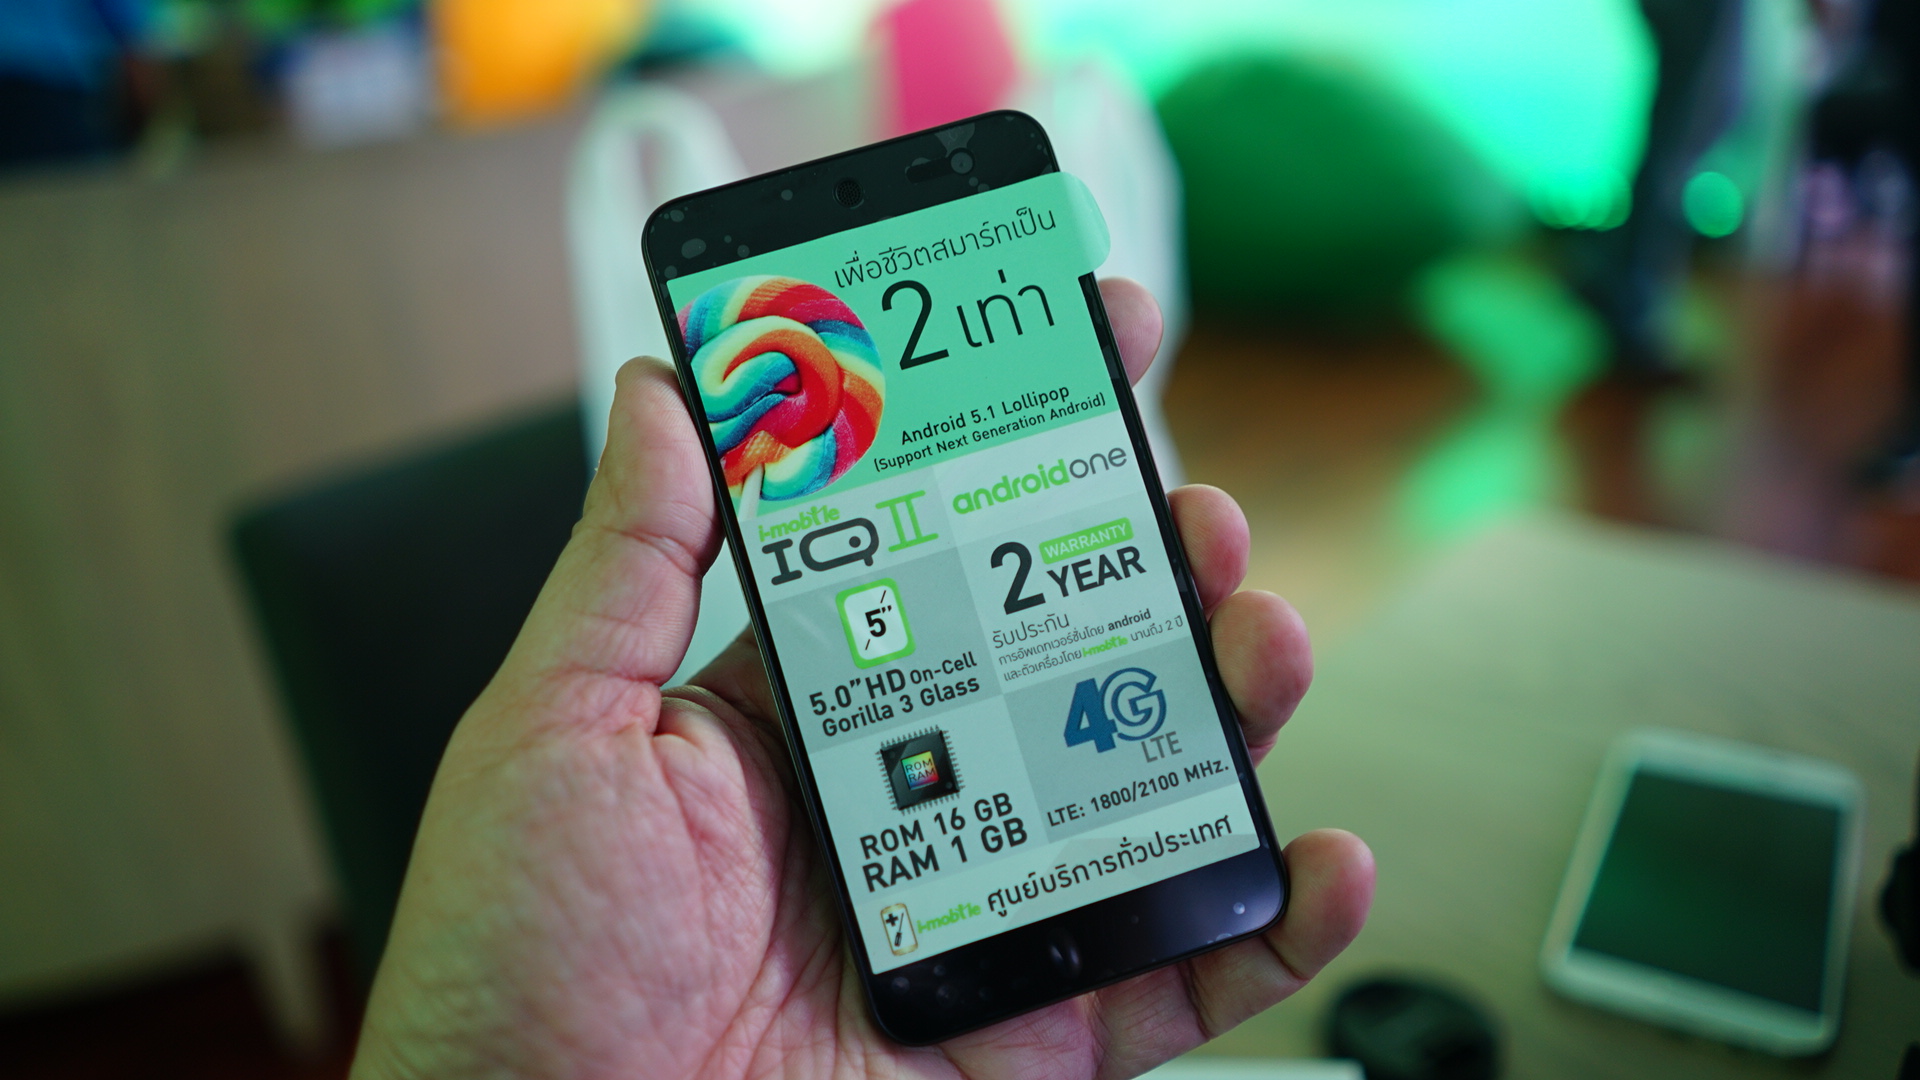 DSC06459 | Android One | ราคาและข้อมูล i-Mobile IQ II มาแล้ว! Android One เครื่องแรกของไทย ขาย 4,444 บาท สเปคดีๆ พร้อมการันตีการอัพเดทระบบสองปีจาก Google